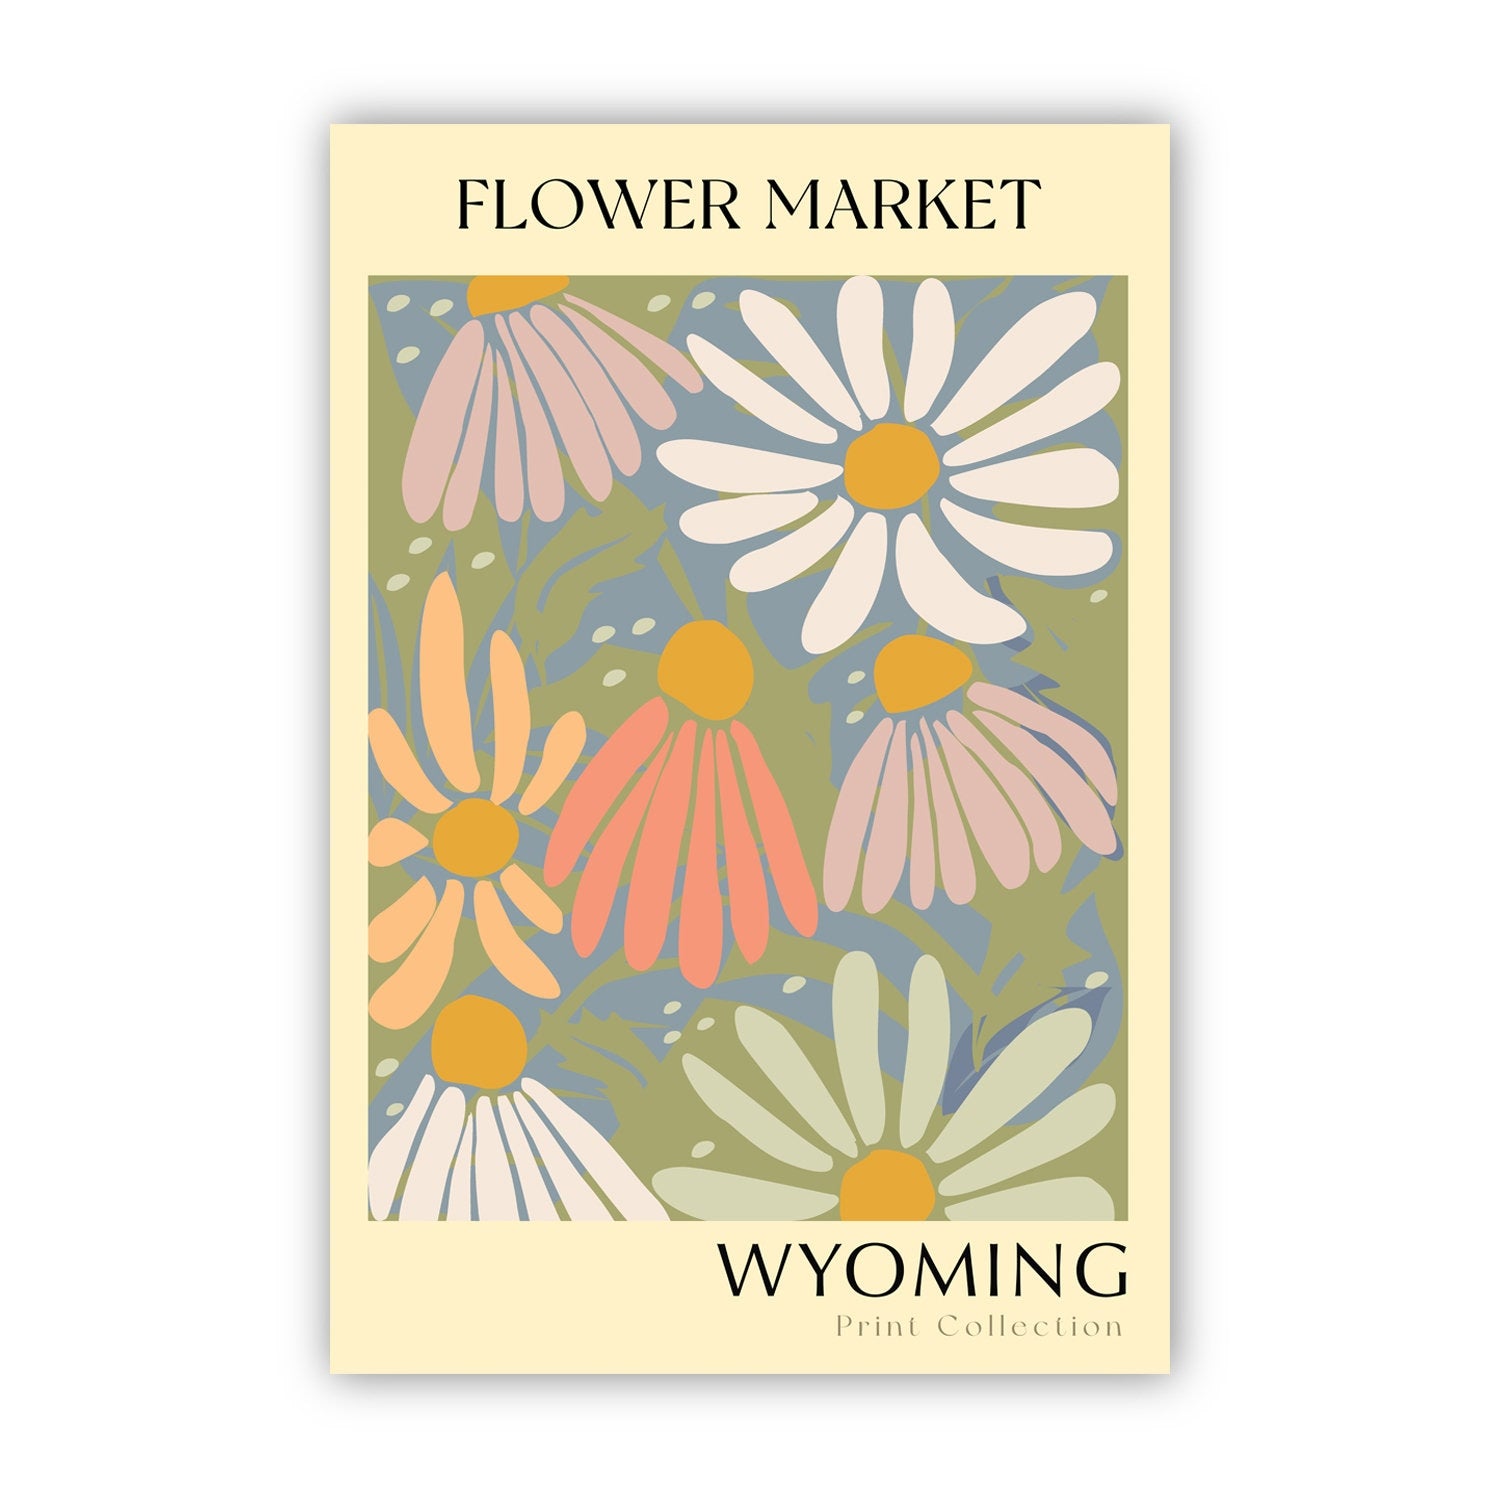 Wyoming State flower print, USA states poster, Wyoming flower market poster, Botanical poster, Nature poster artwork, Boho floral wall art